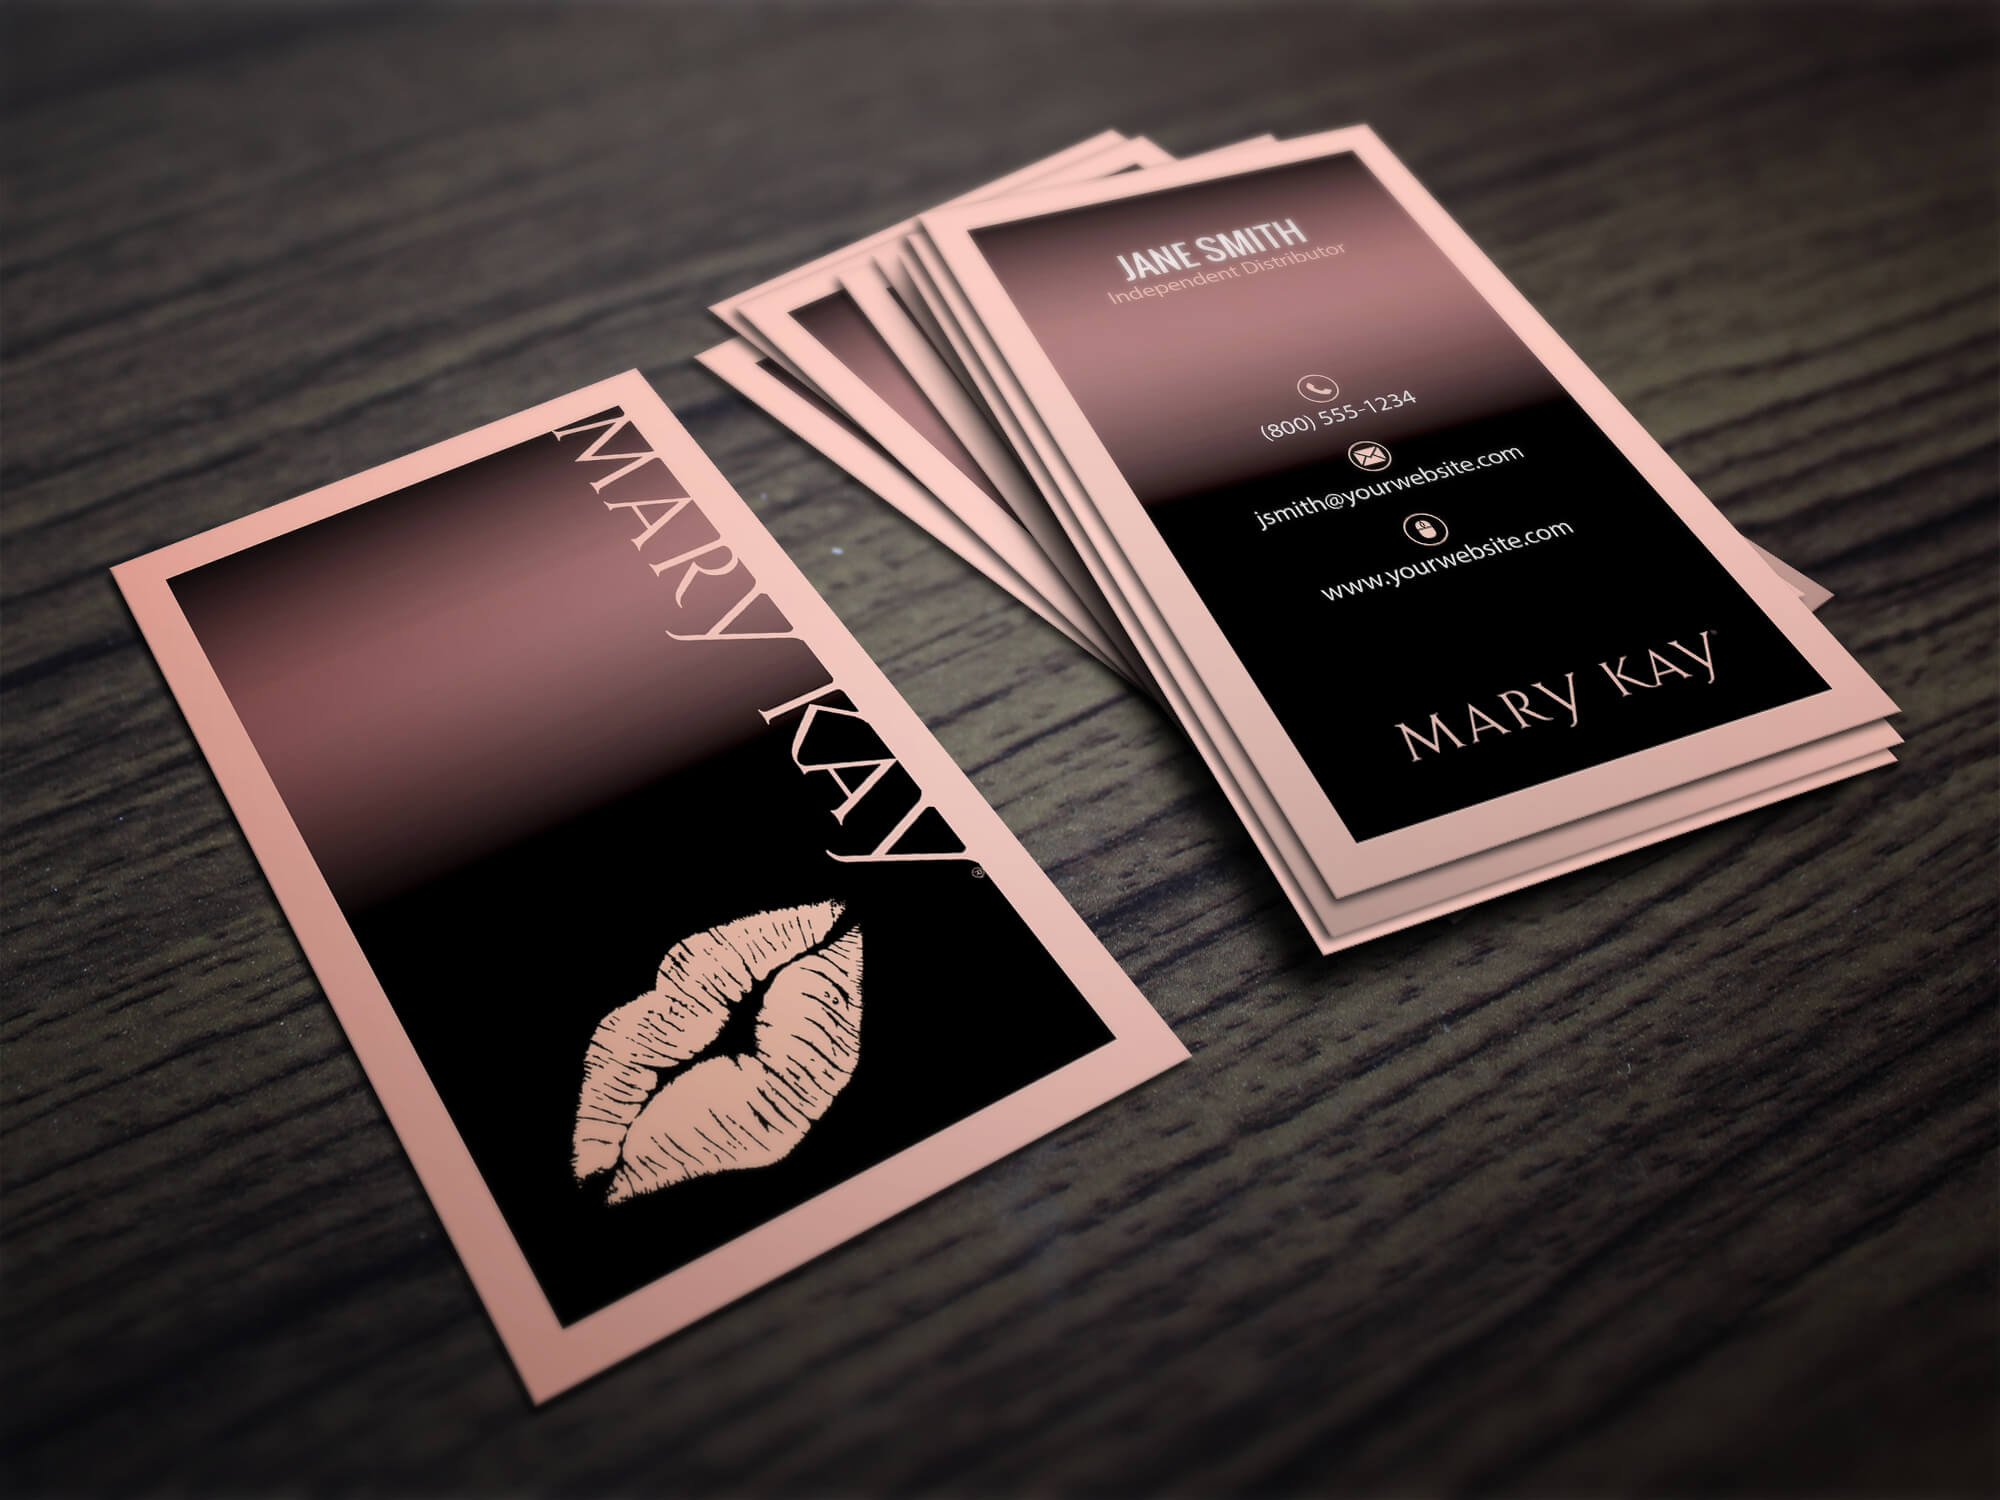 Mary Kay Business Cards | Mary Kay Business Cards | Mary Kay Throughout Mary Kay Business Cards Templates Free